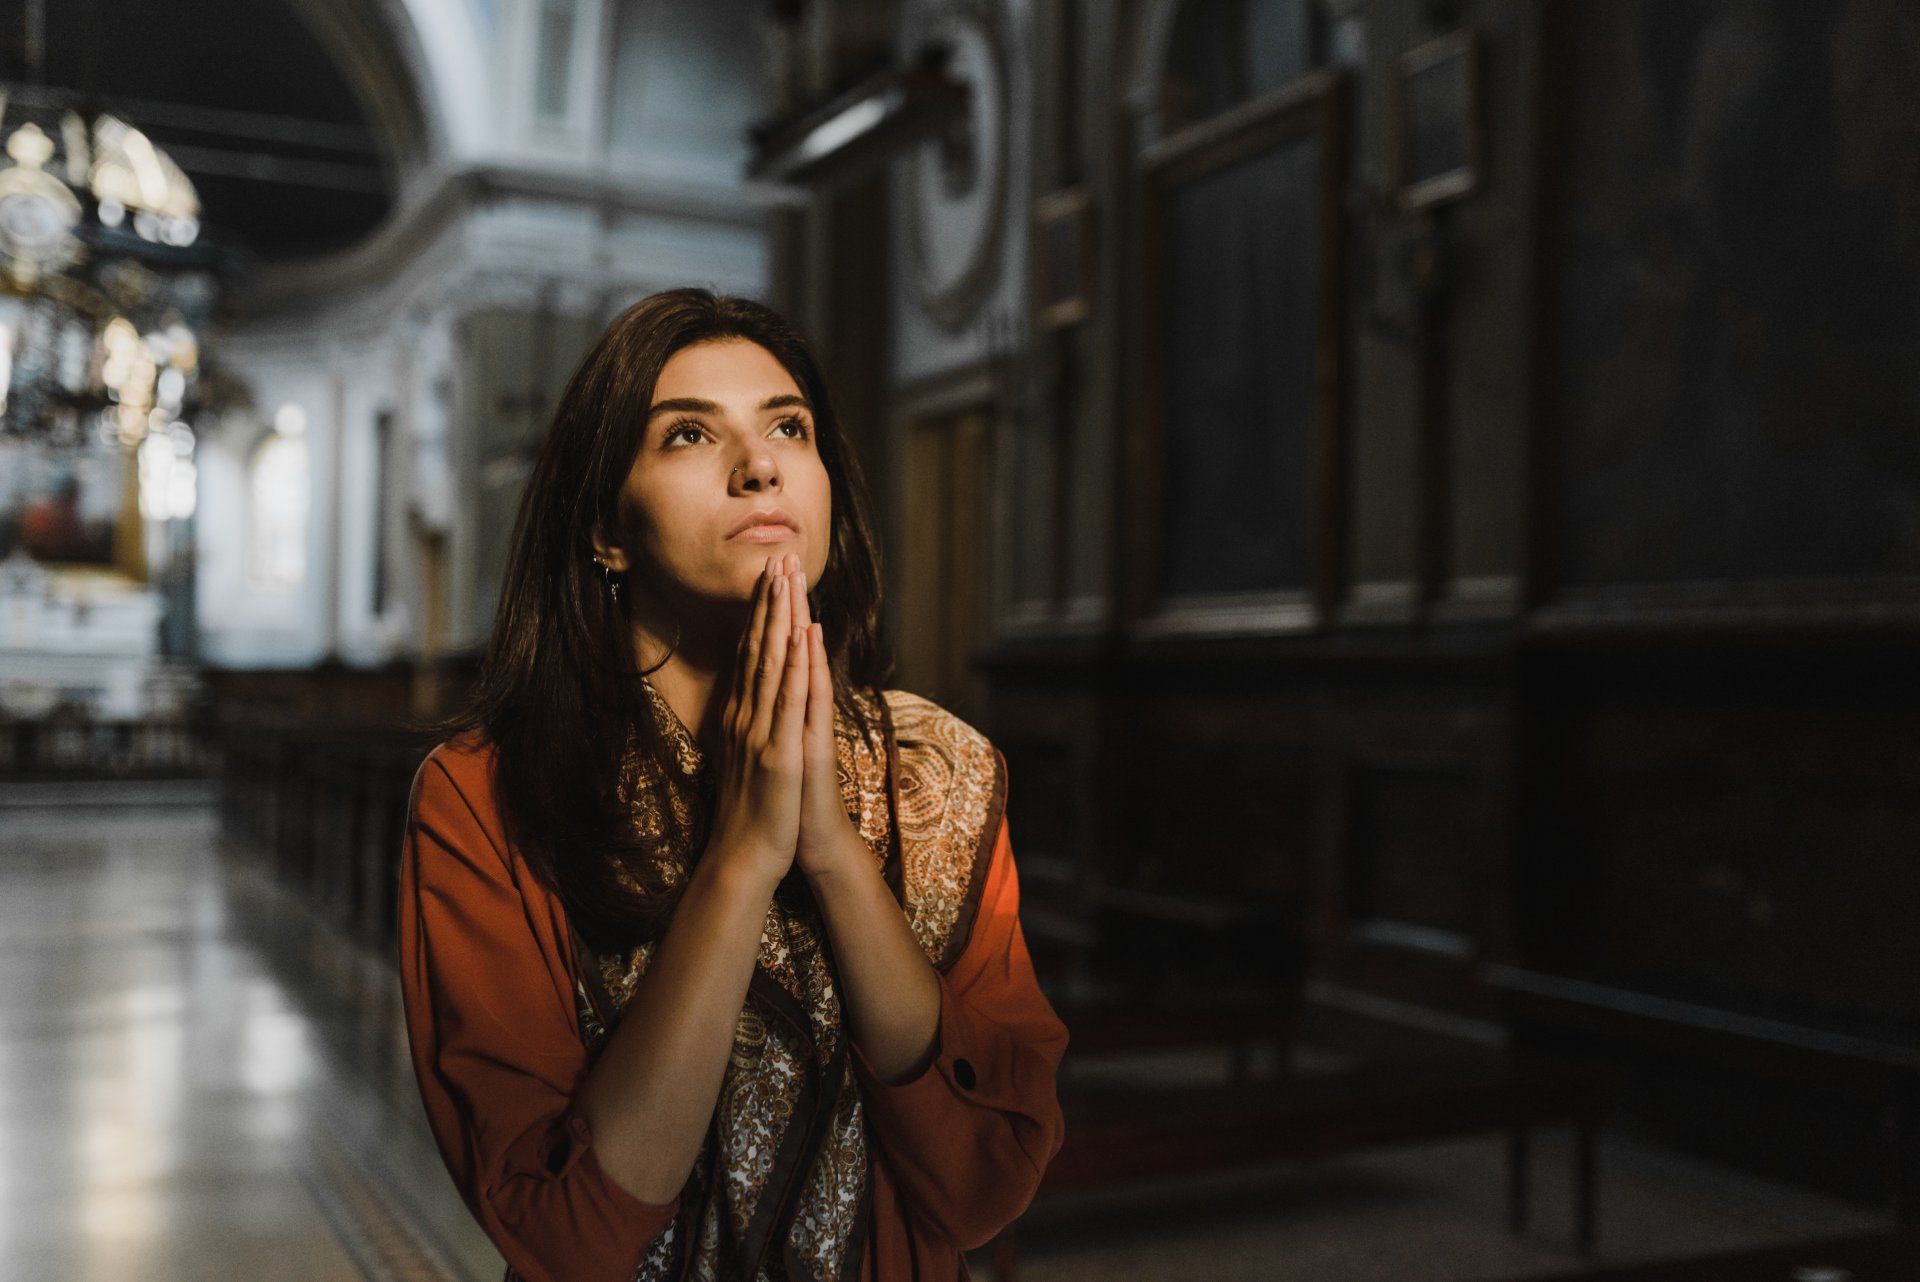 Woman praying in church looking up